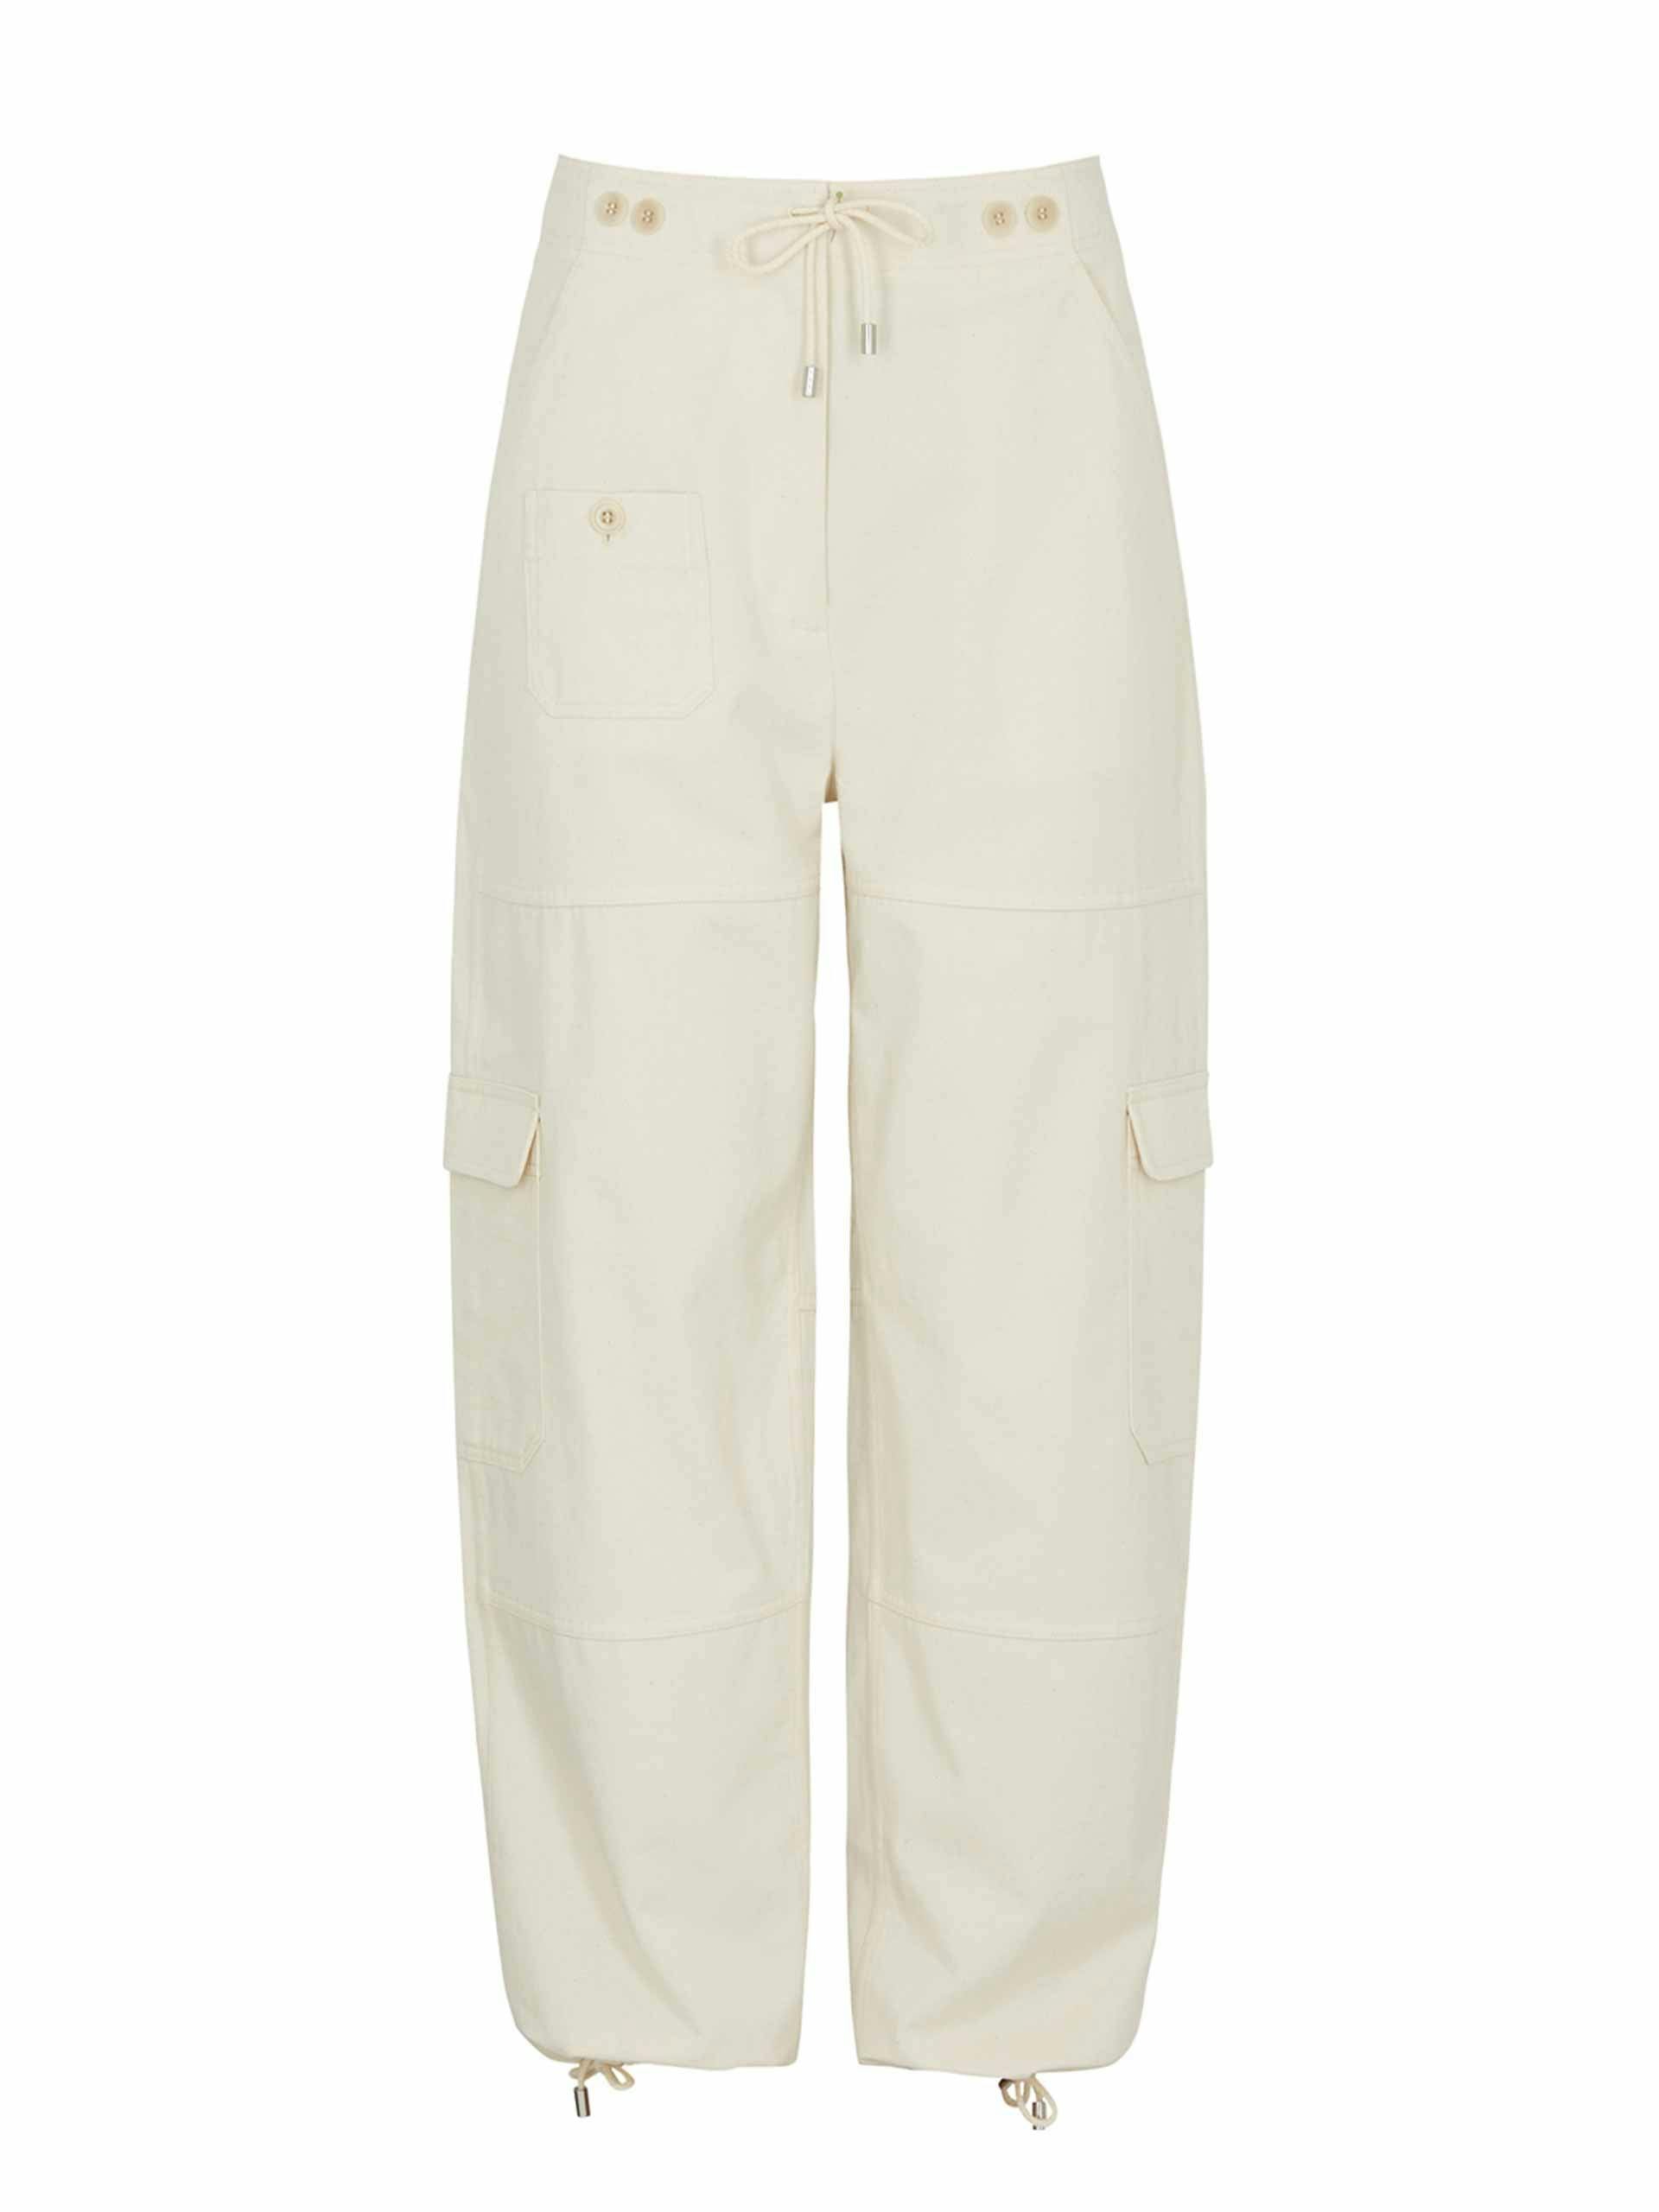 White cargo trousers